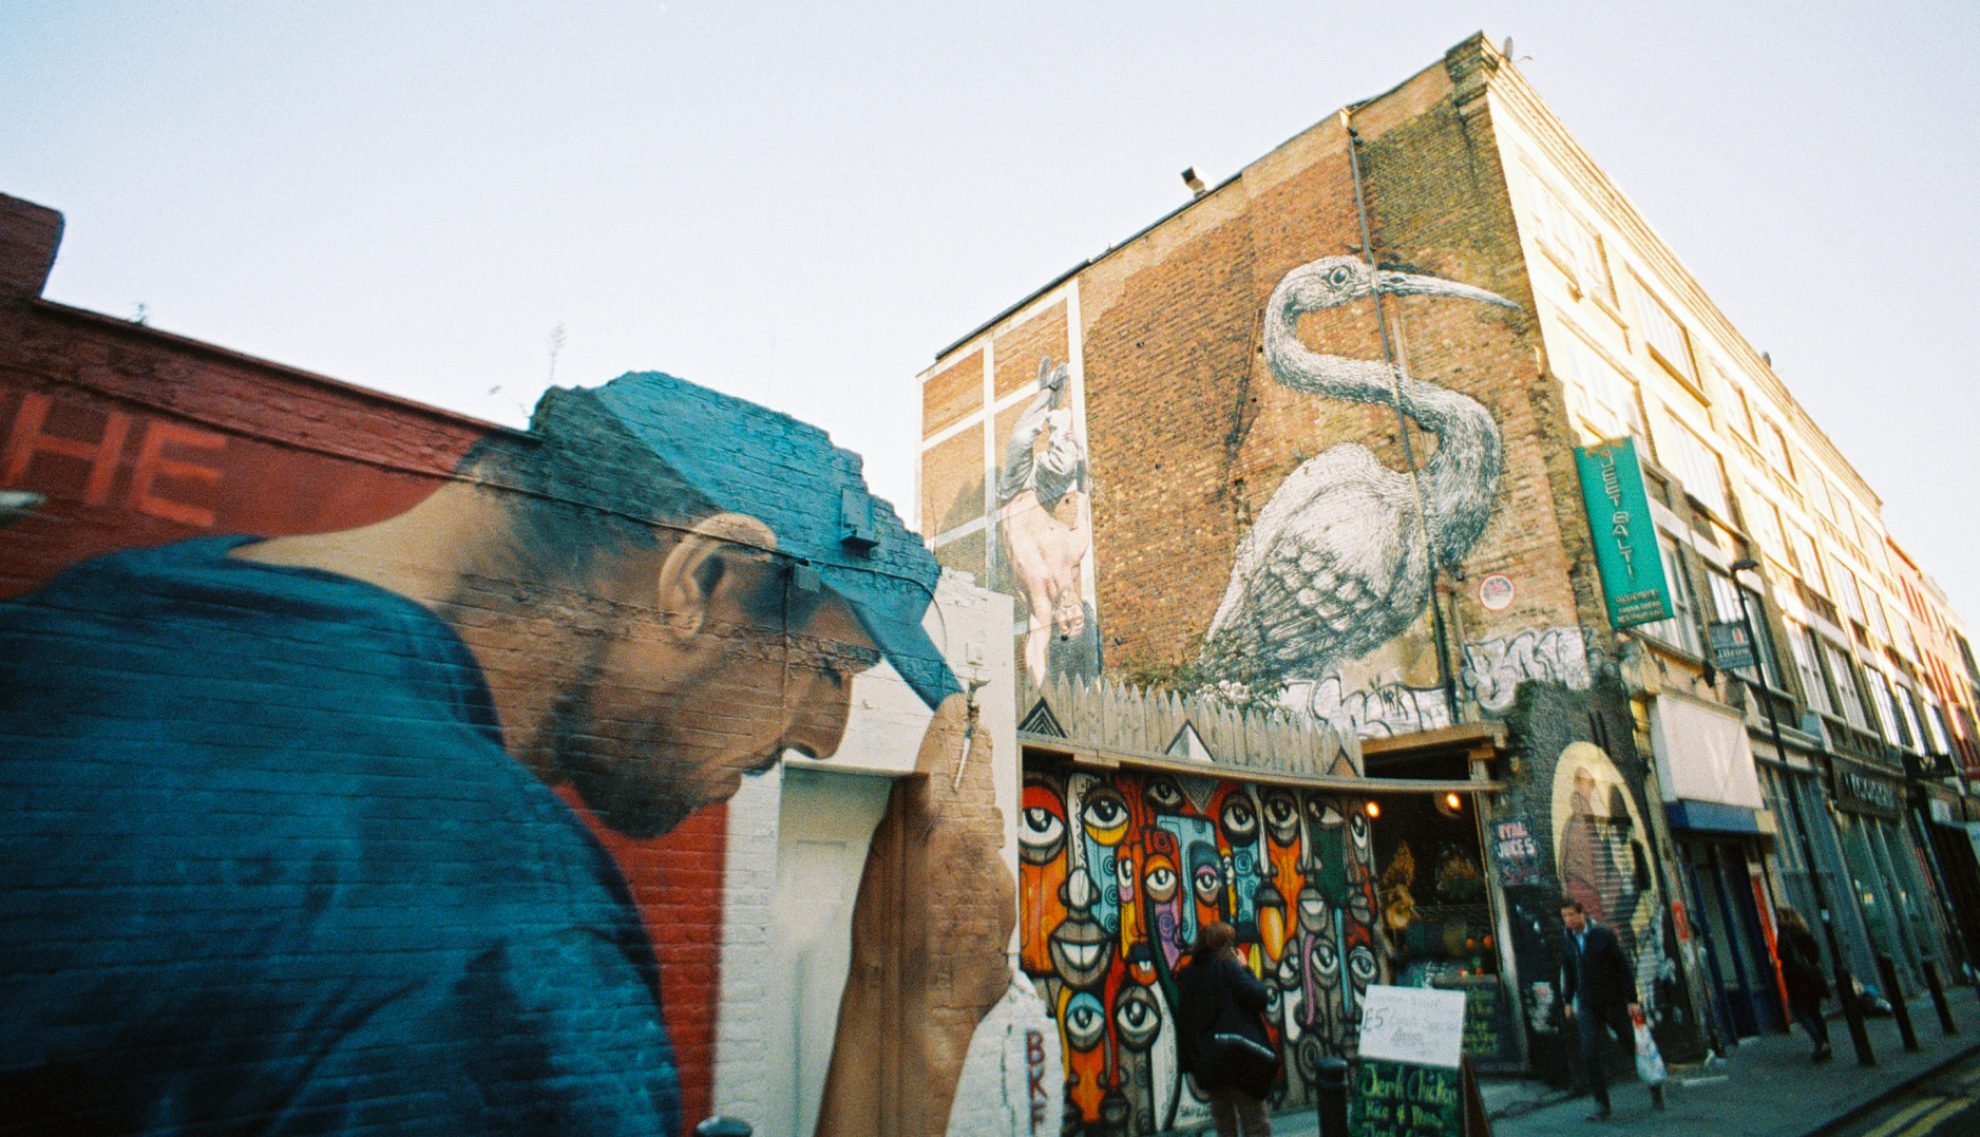 Brick lane street art in the E1 London postcode